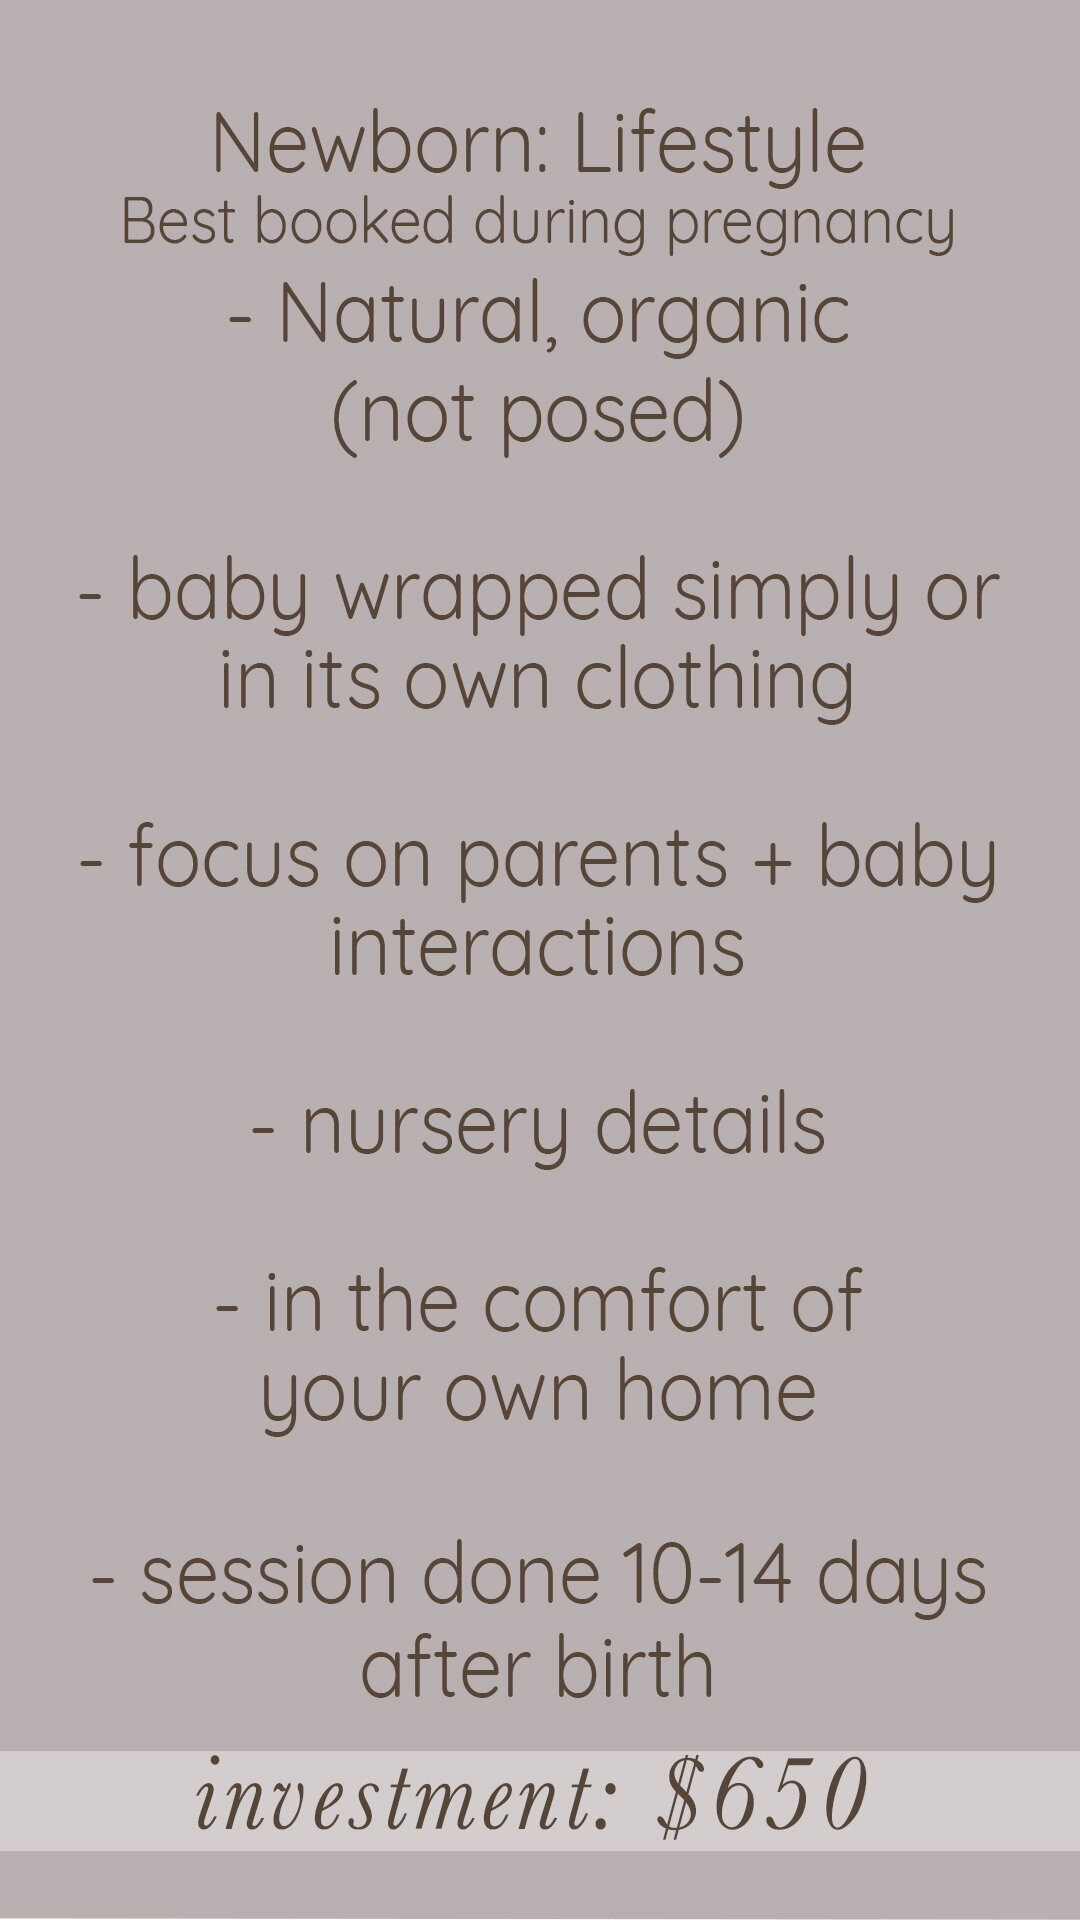 lifestyle-newborn-cny-info